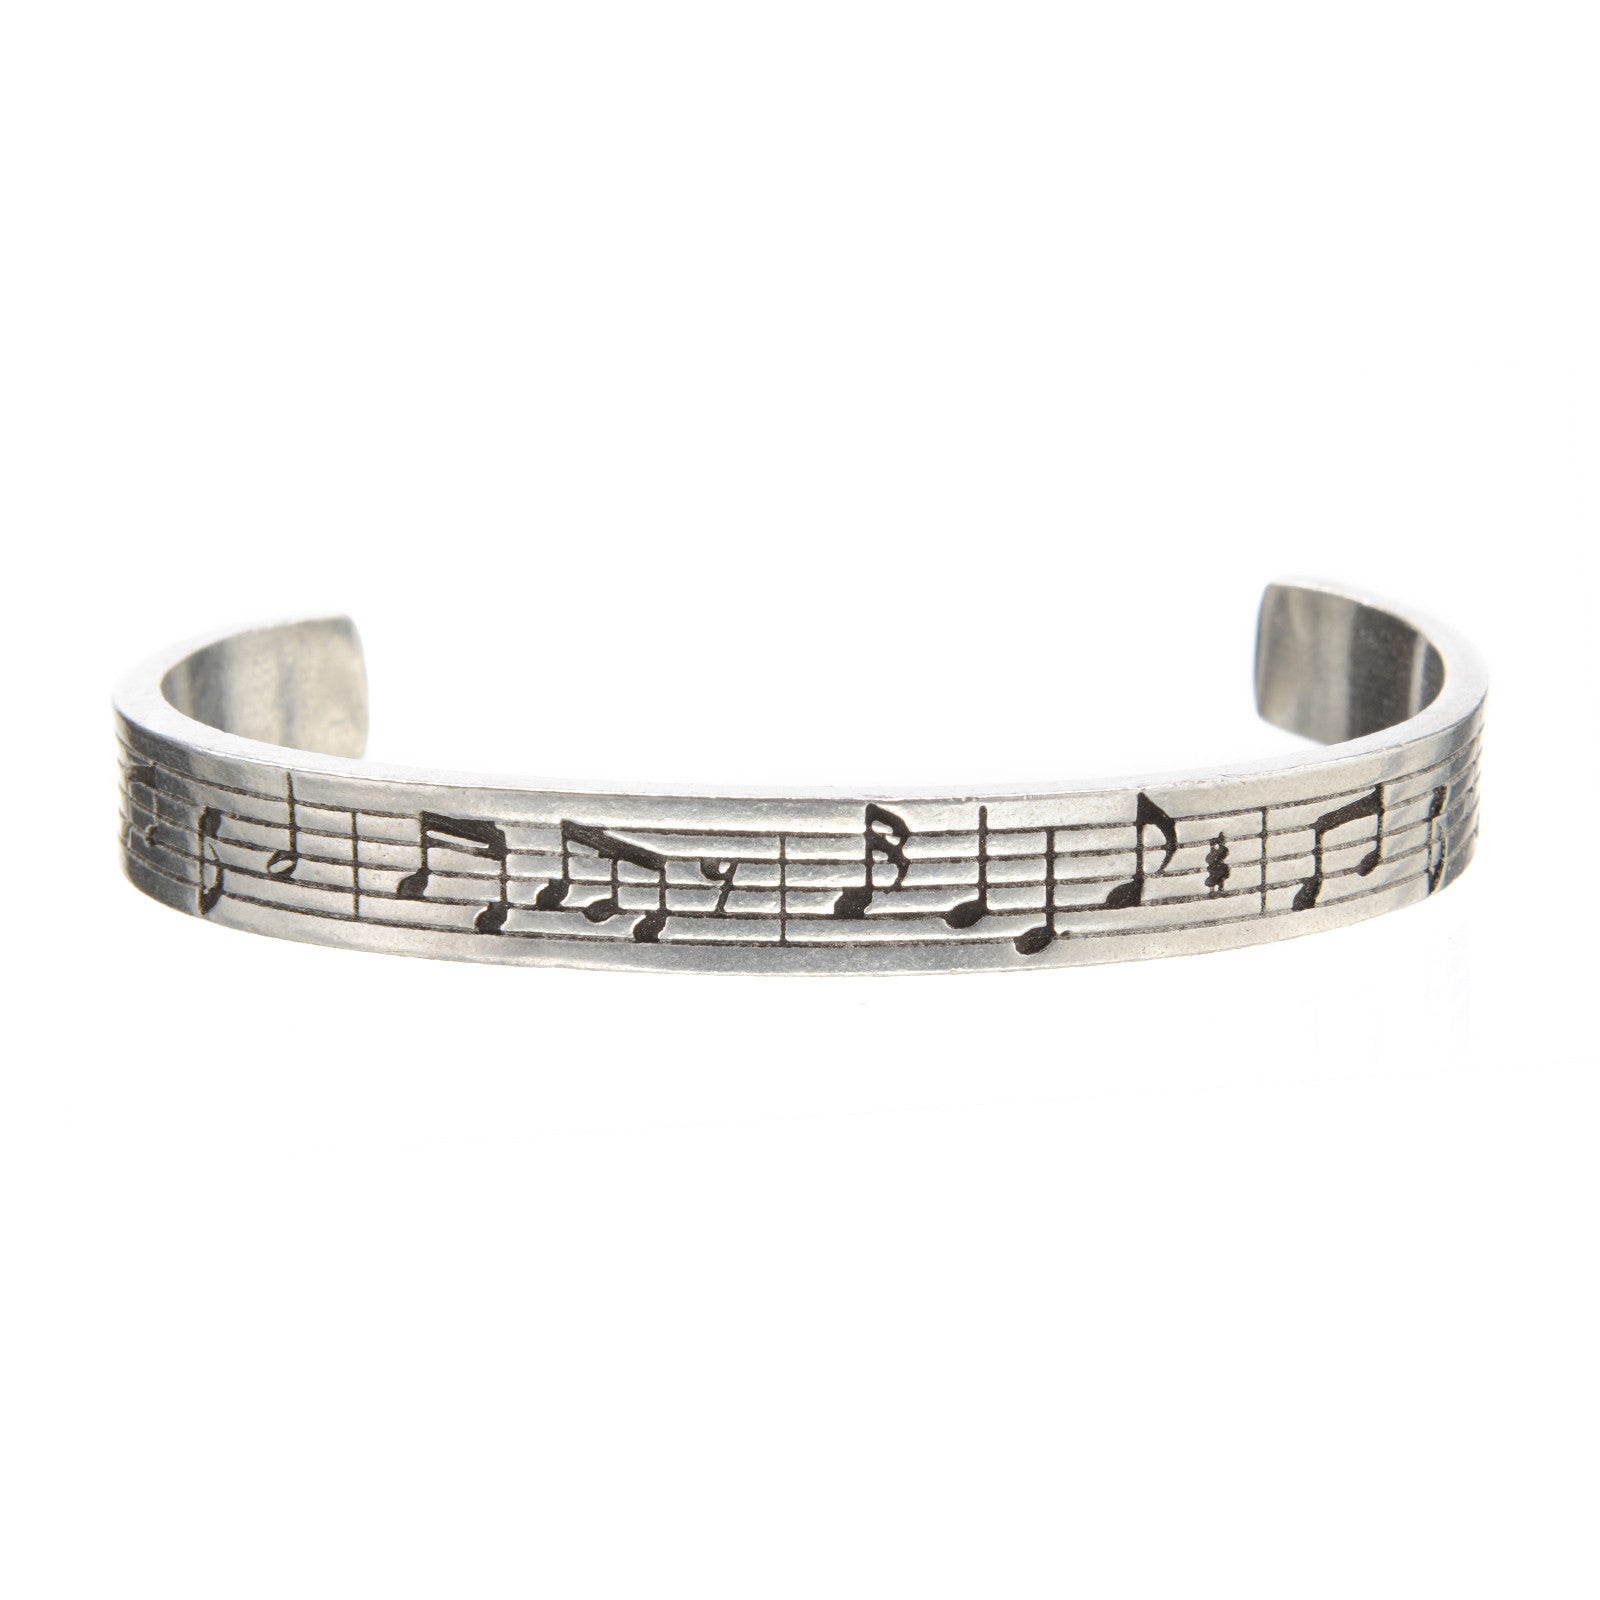 Music Notes (Inside - Music The Universal Language) Cuff Bracelet